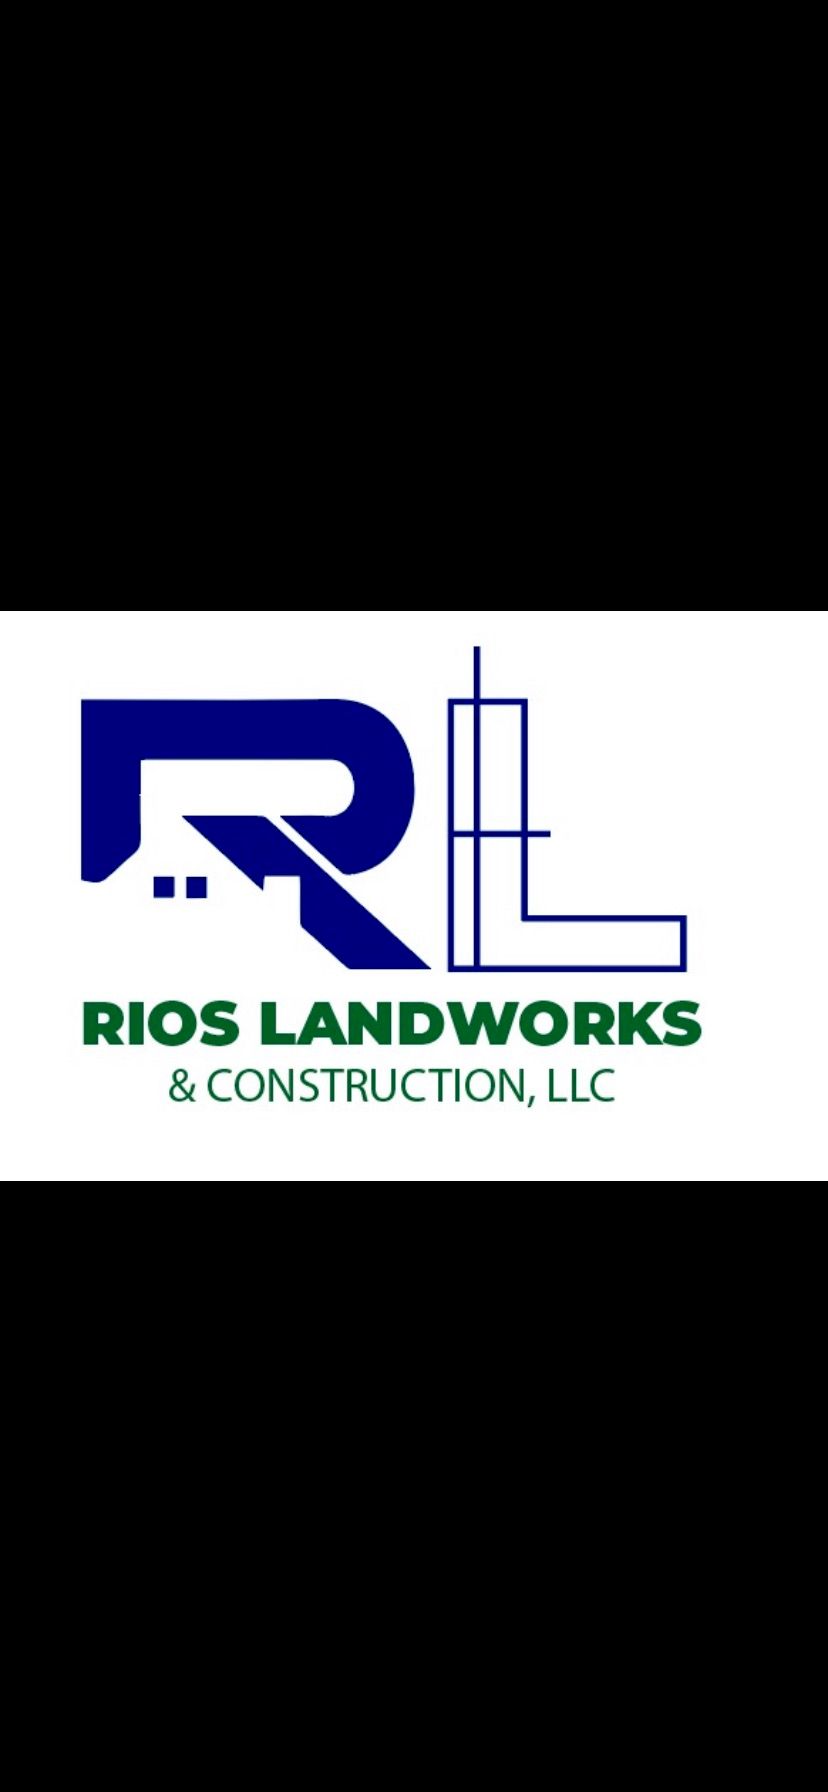 Rios Landworks & Construction LLC